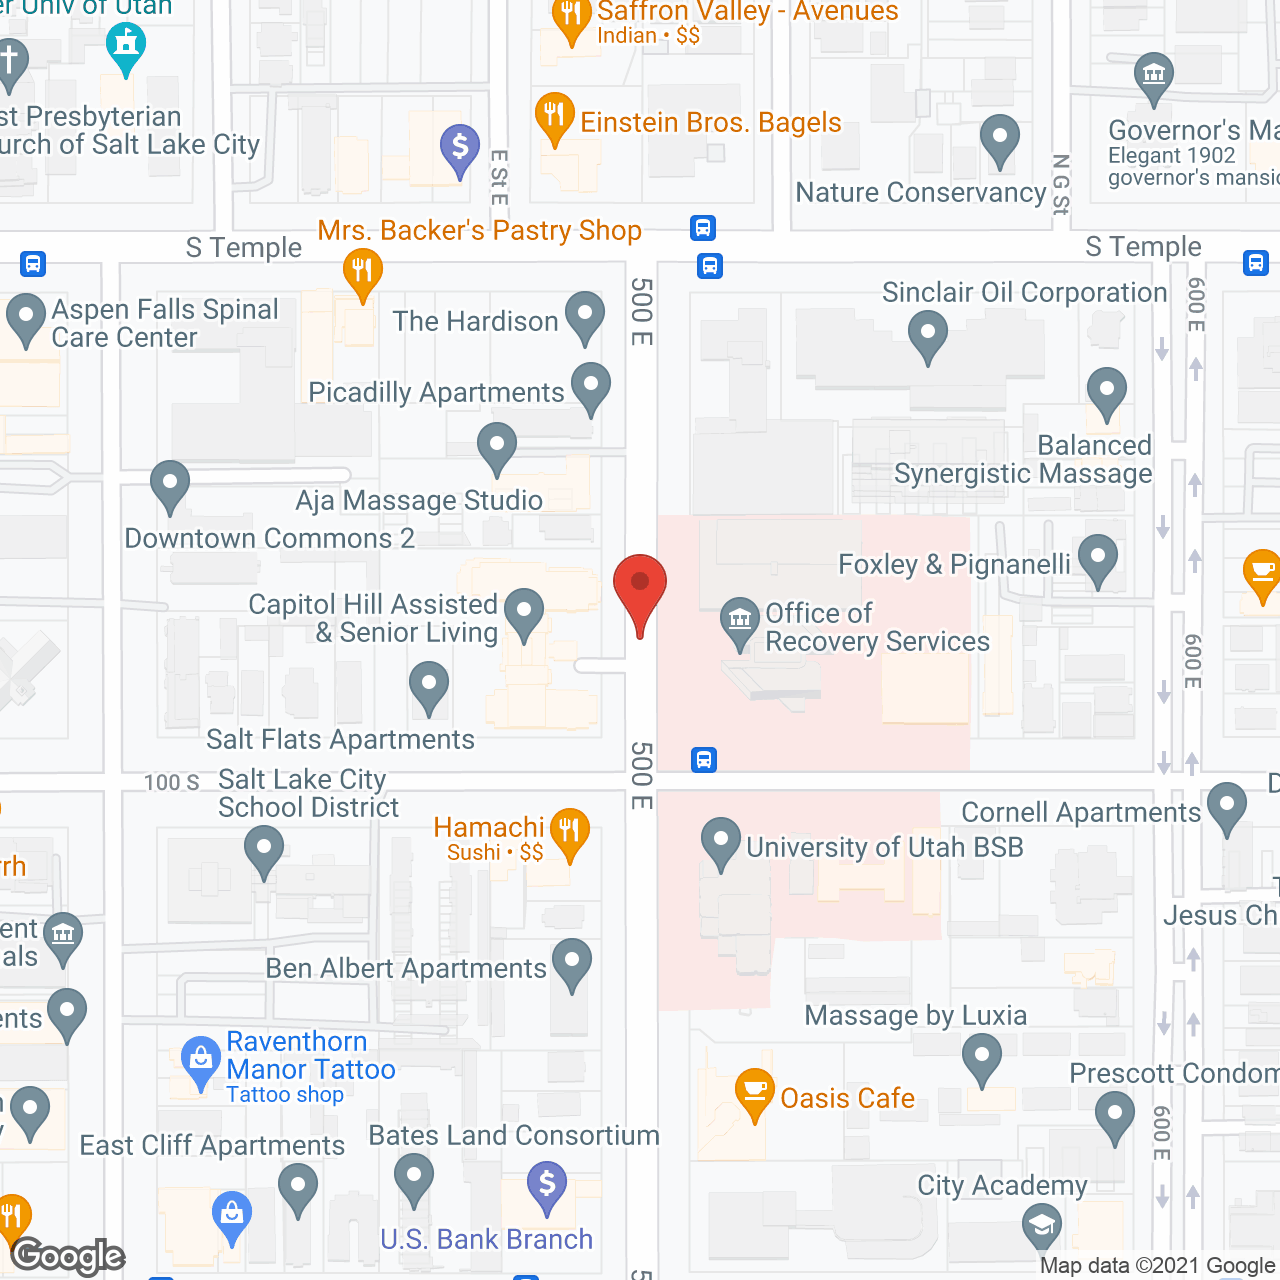 Capitol Hill Senior Living in google map